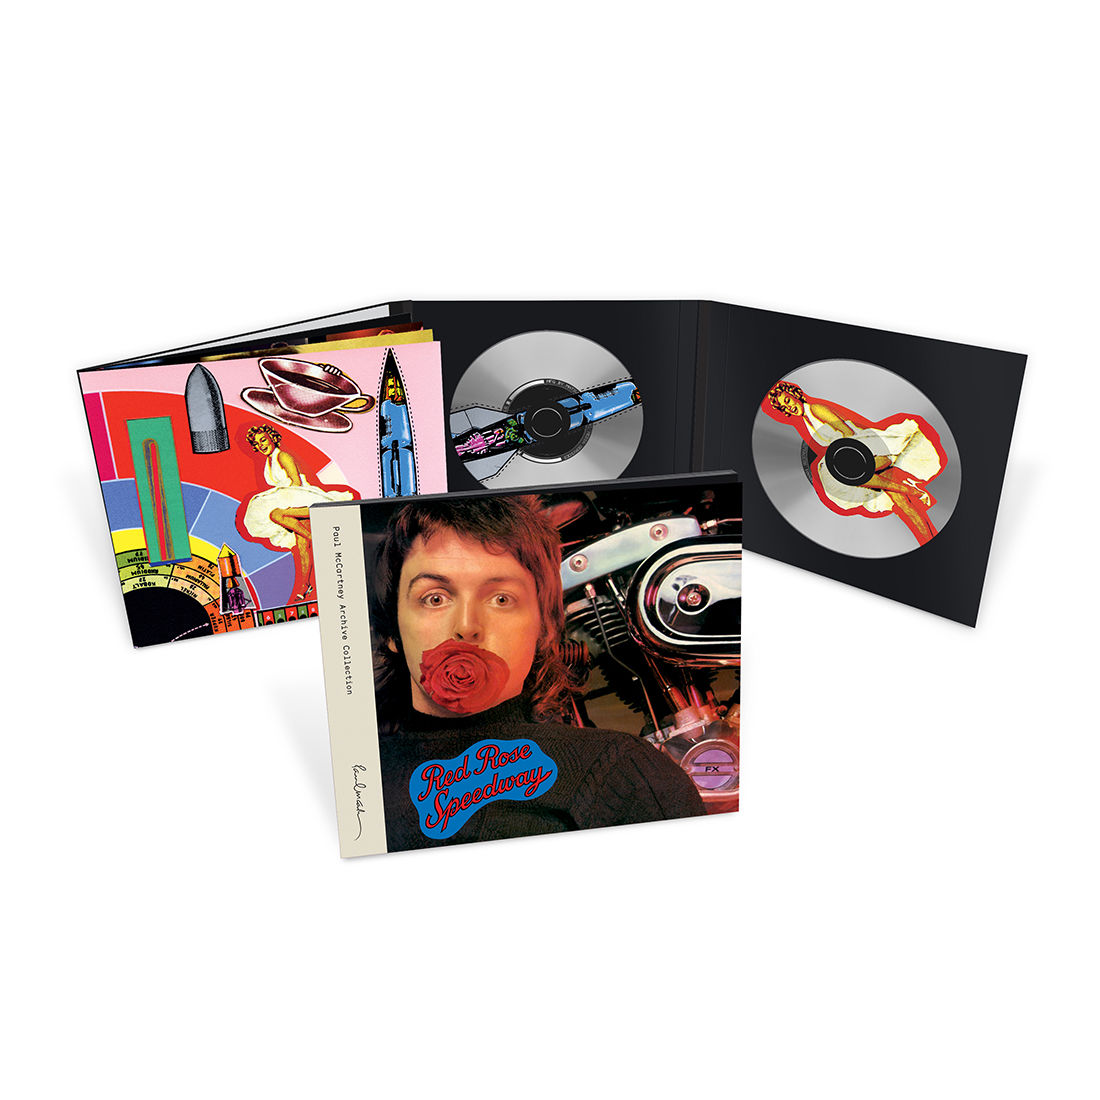 Paul McCartney & Wings - Red Rose Speedway: Digipack 2CD